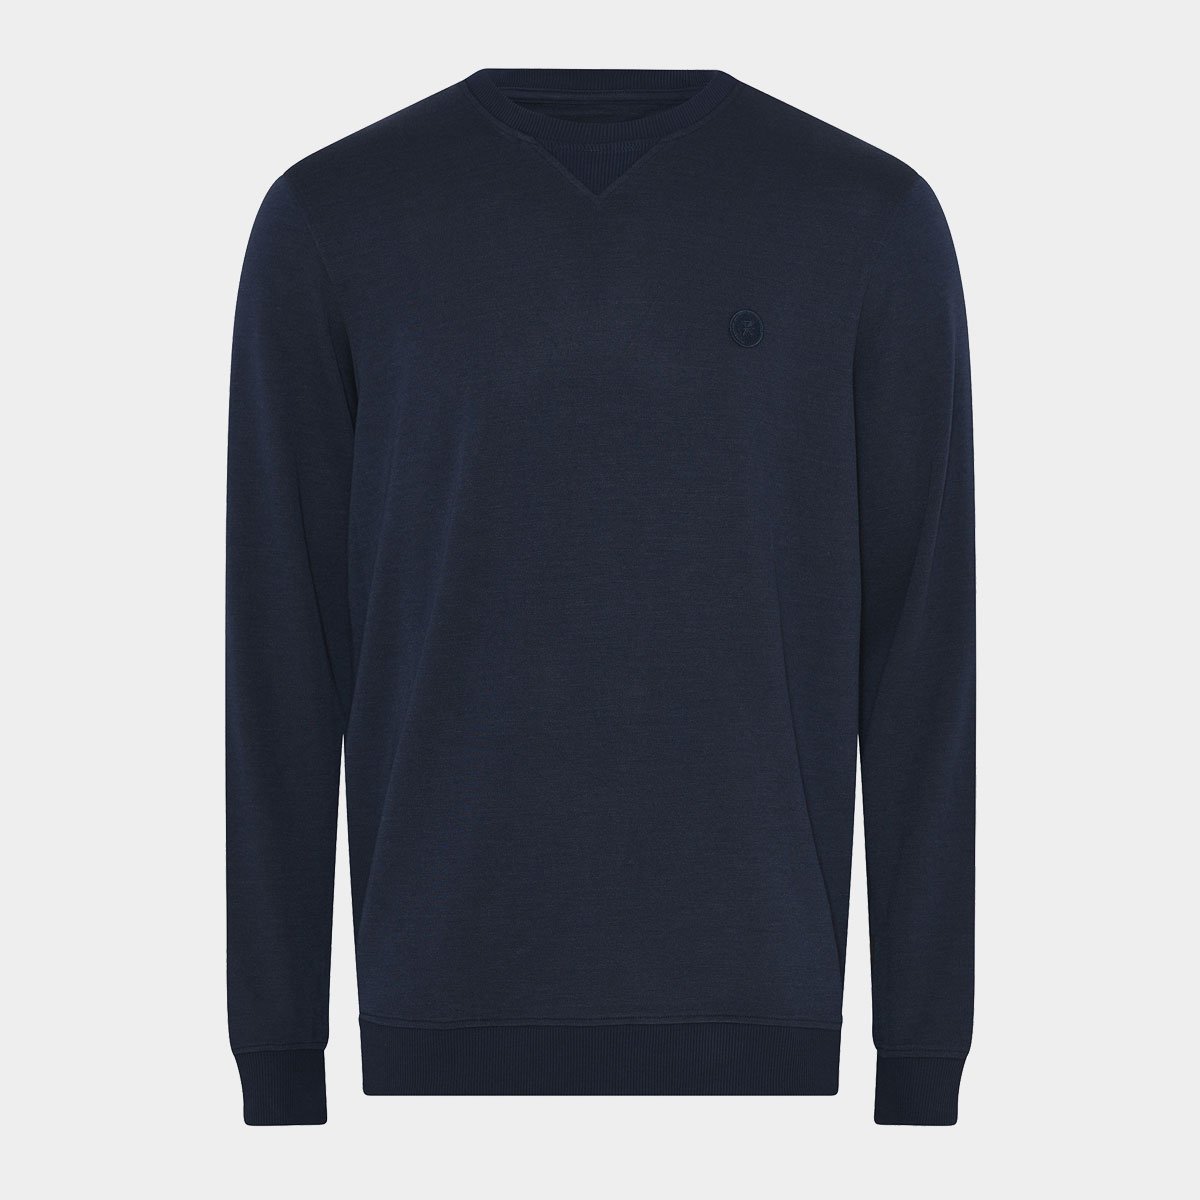 Bambus sweatshirt | navyblå sweatshirt til mænd fra JBS of Denmark, XXL